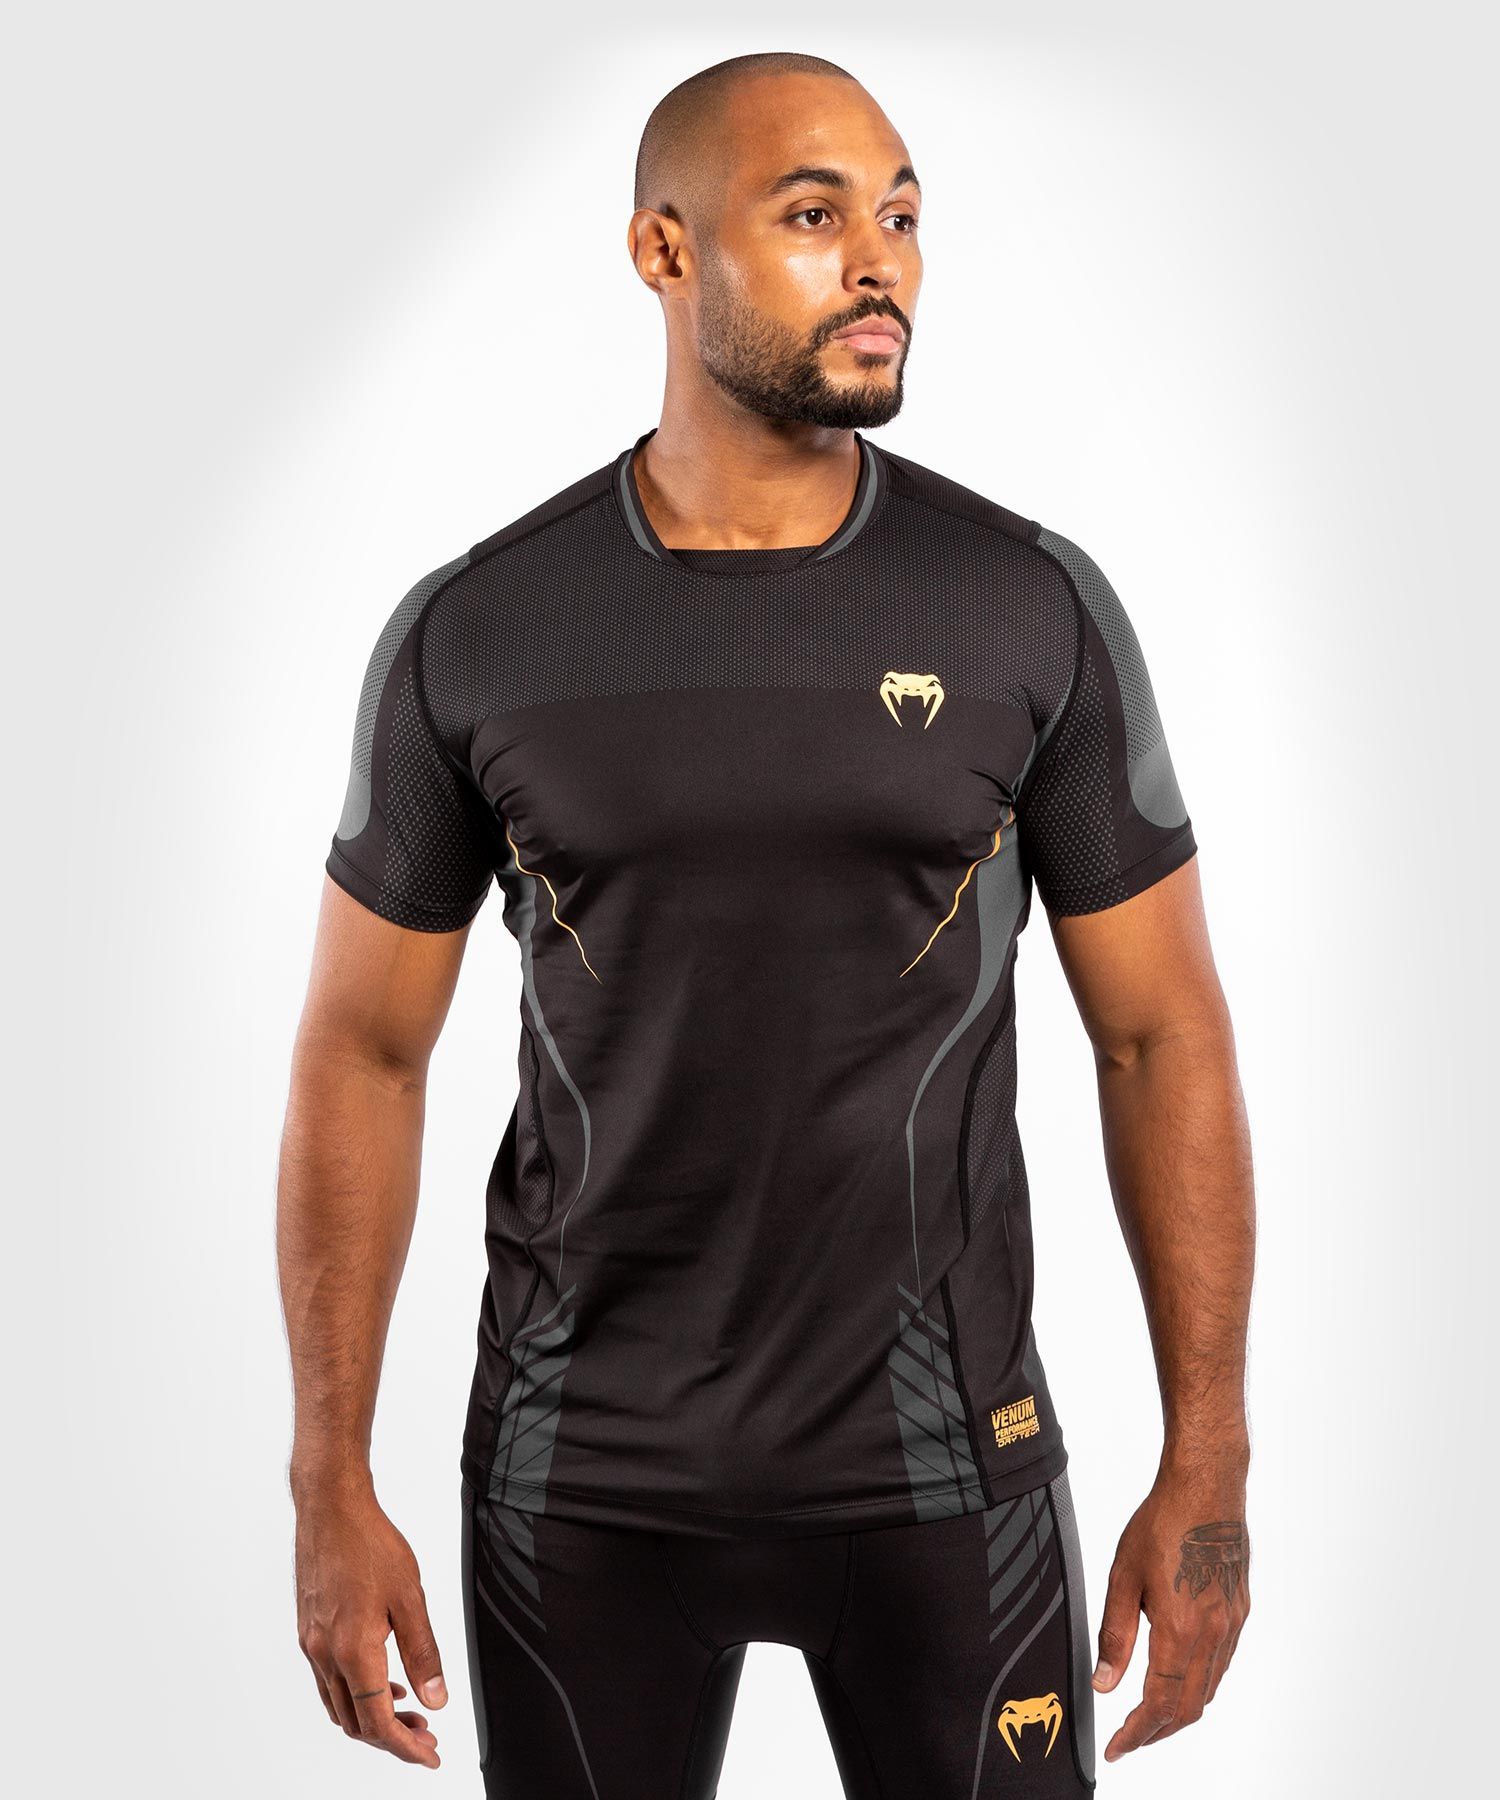 Venum Athletics Dry Tech T-shirt – Black/Gold